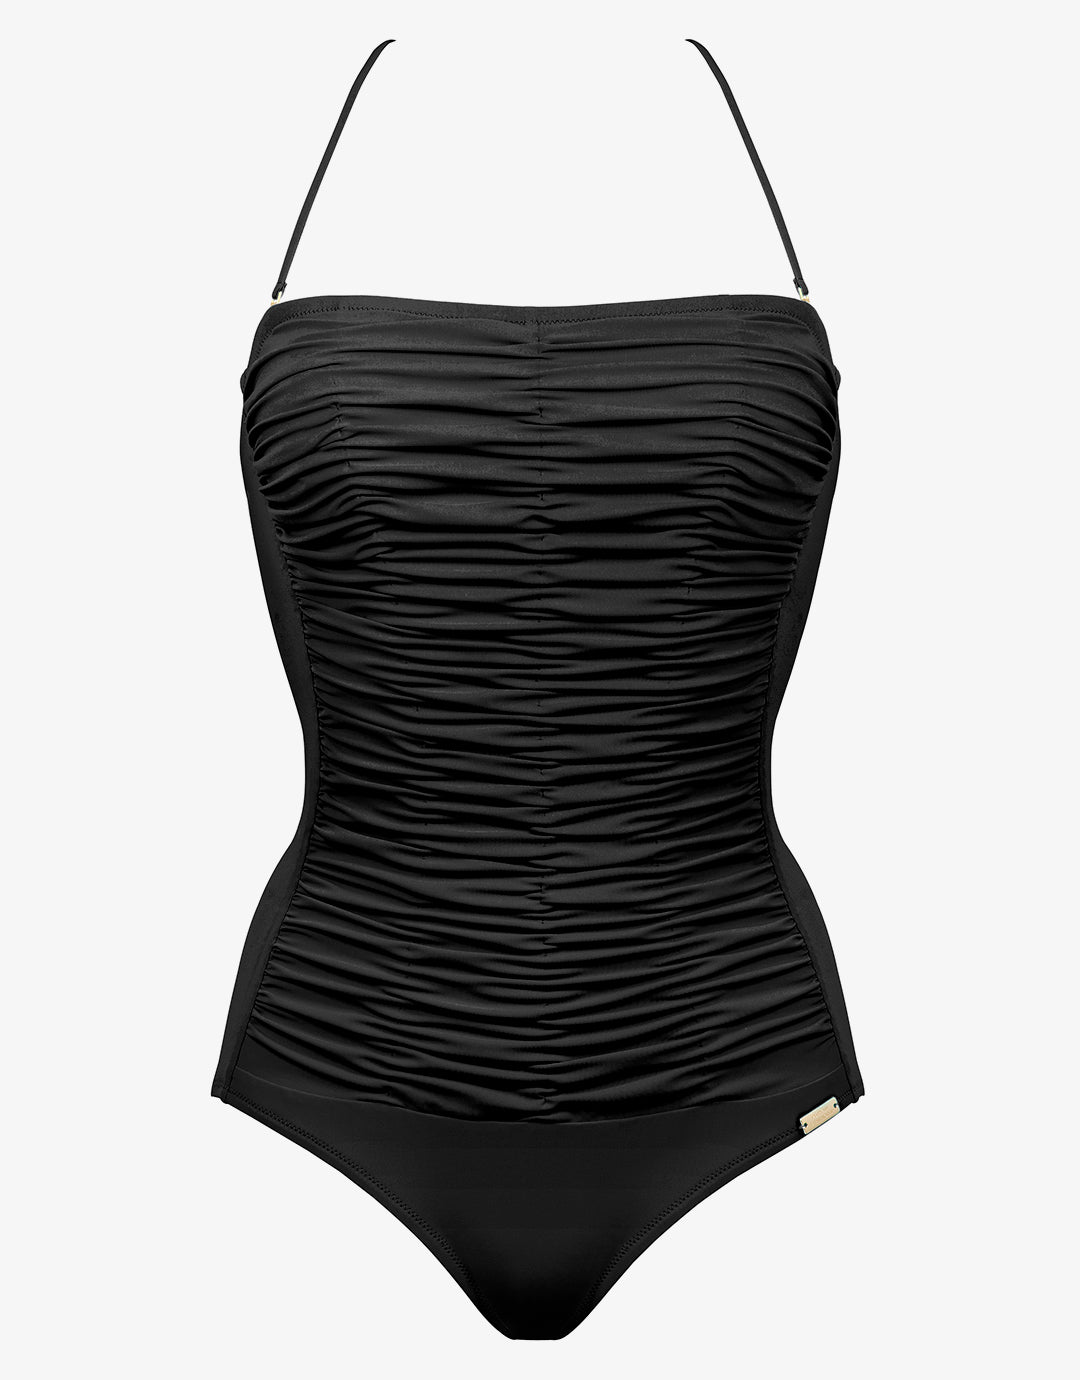 Elements Bandeau Swimsuit - Black - Simply Beach UK